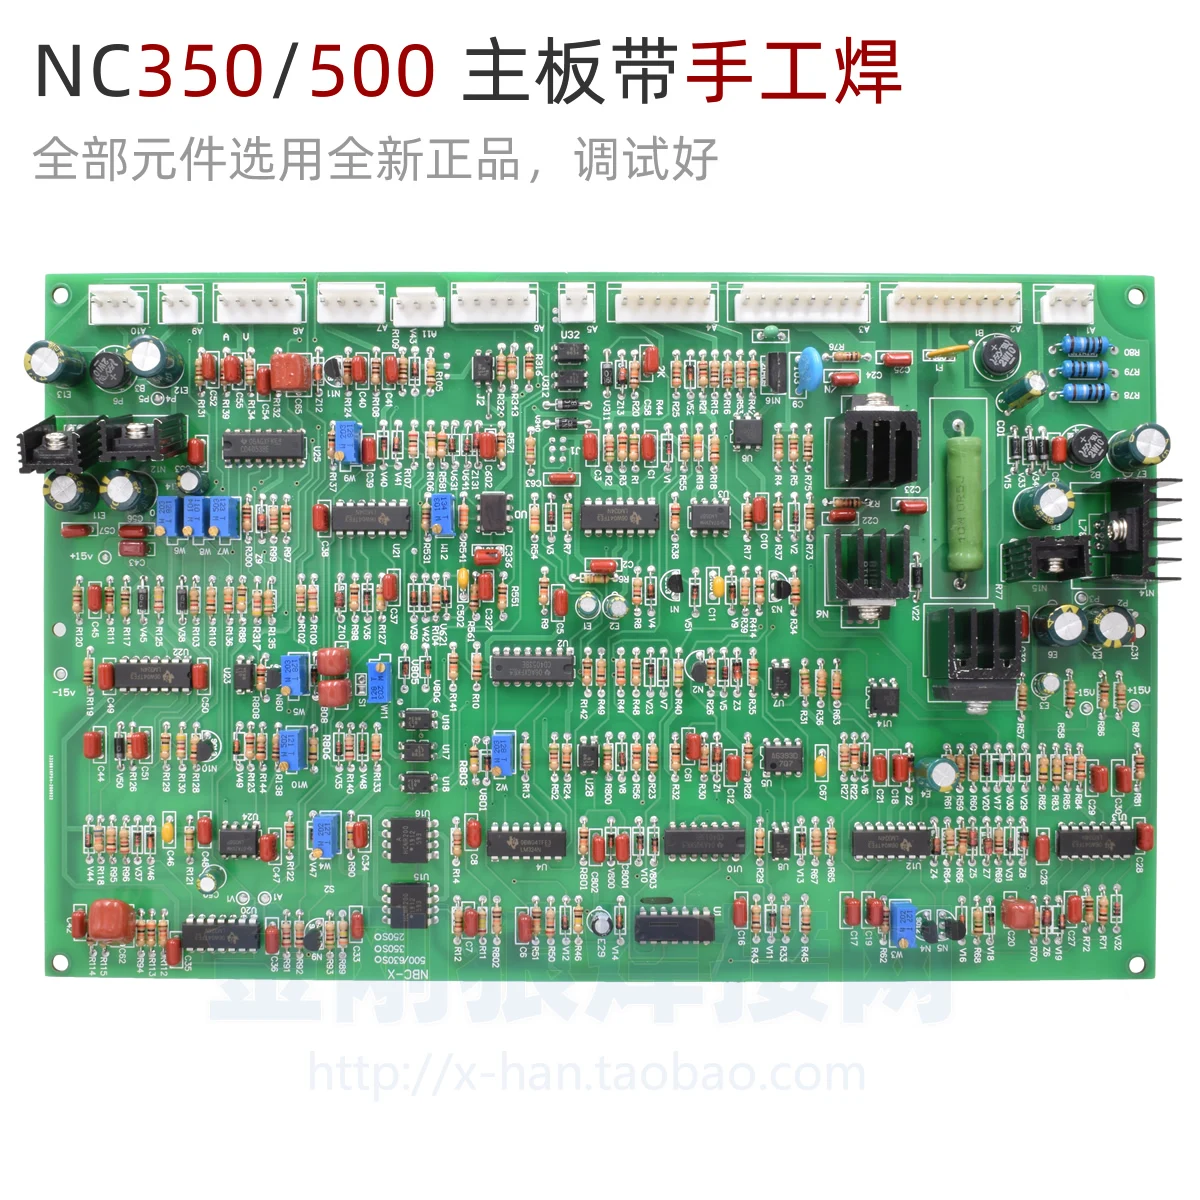 

NB350 500 Inverter Welding Machine Carbon Dioxide Gas Shielded Welding Manual Welding Motherboard